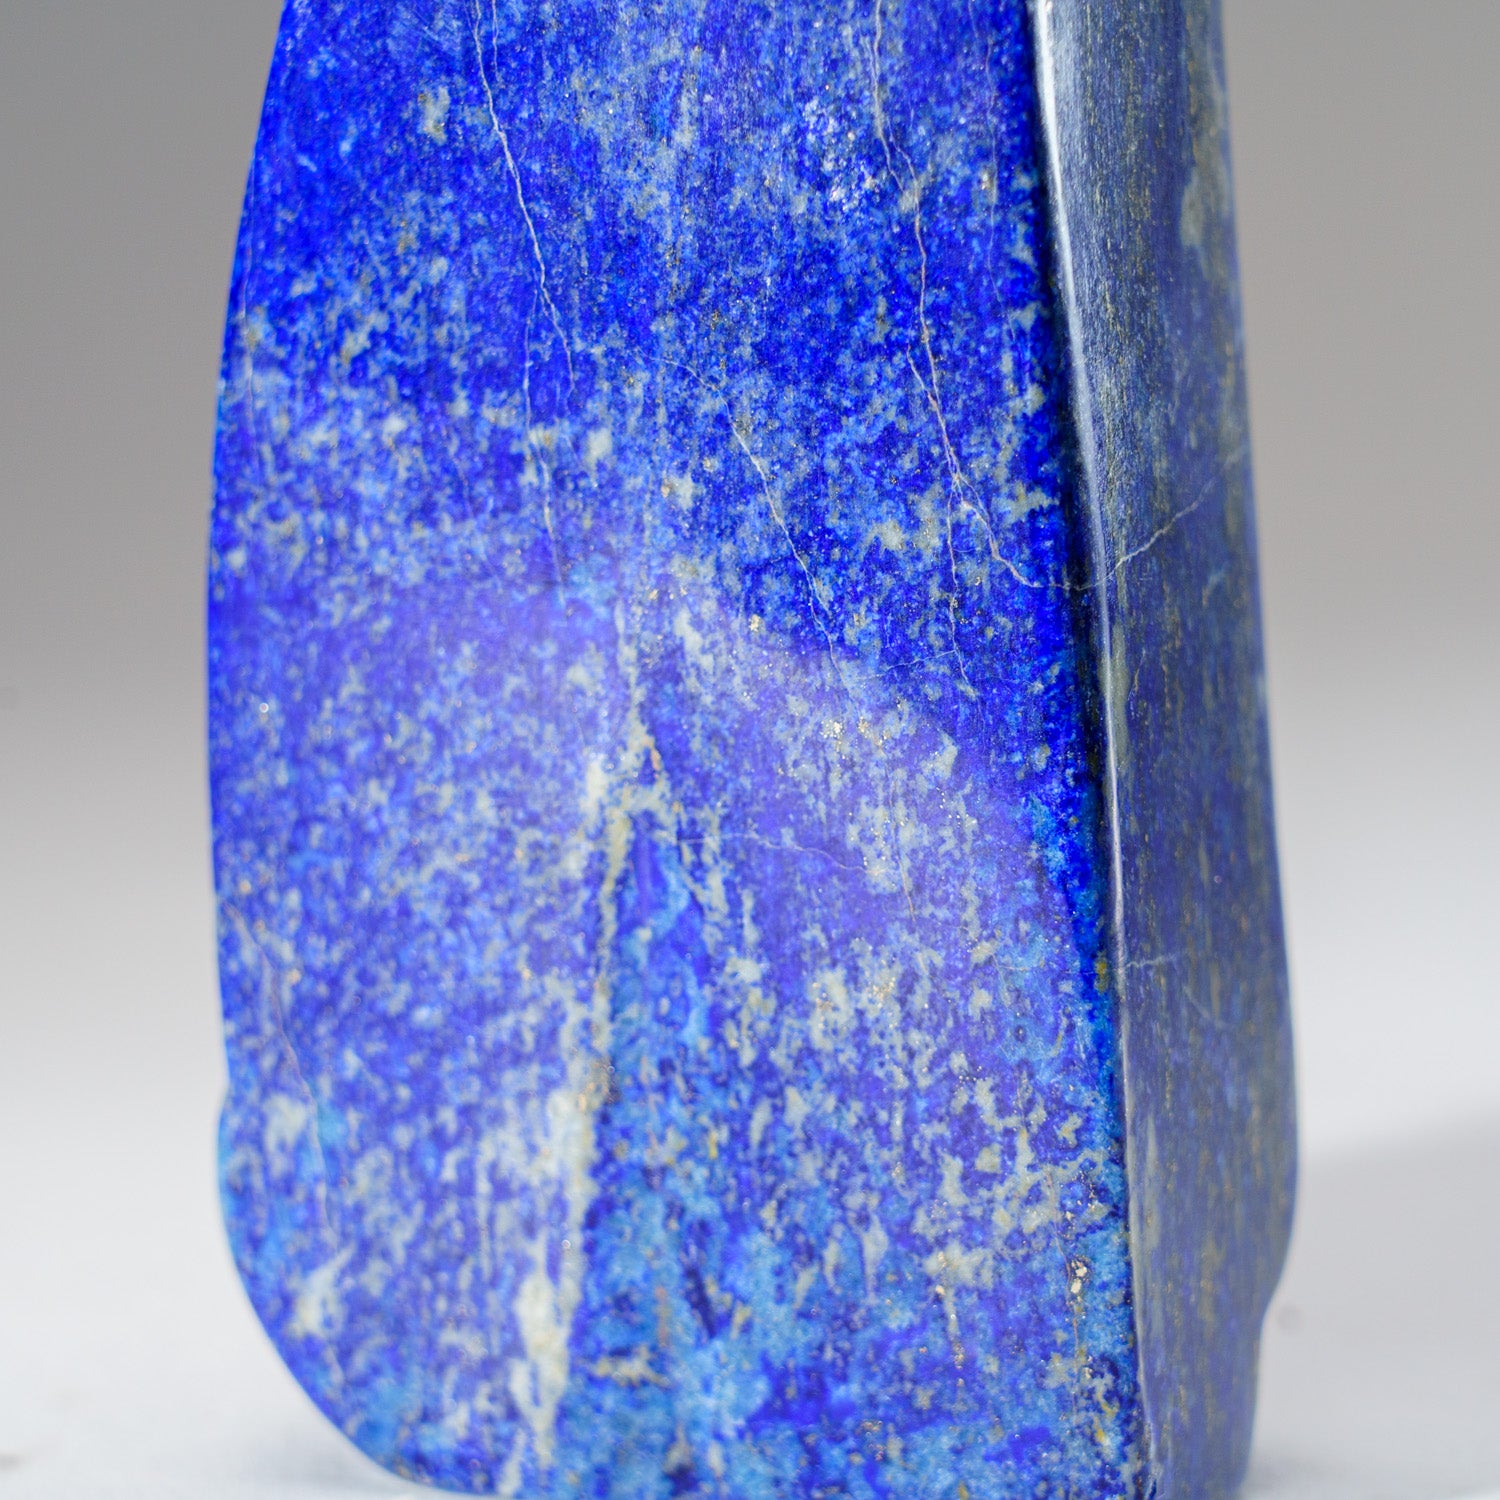 Polished Lapis Lazuli Freeform from Afghanistan (2.5 lbs)